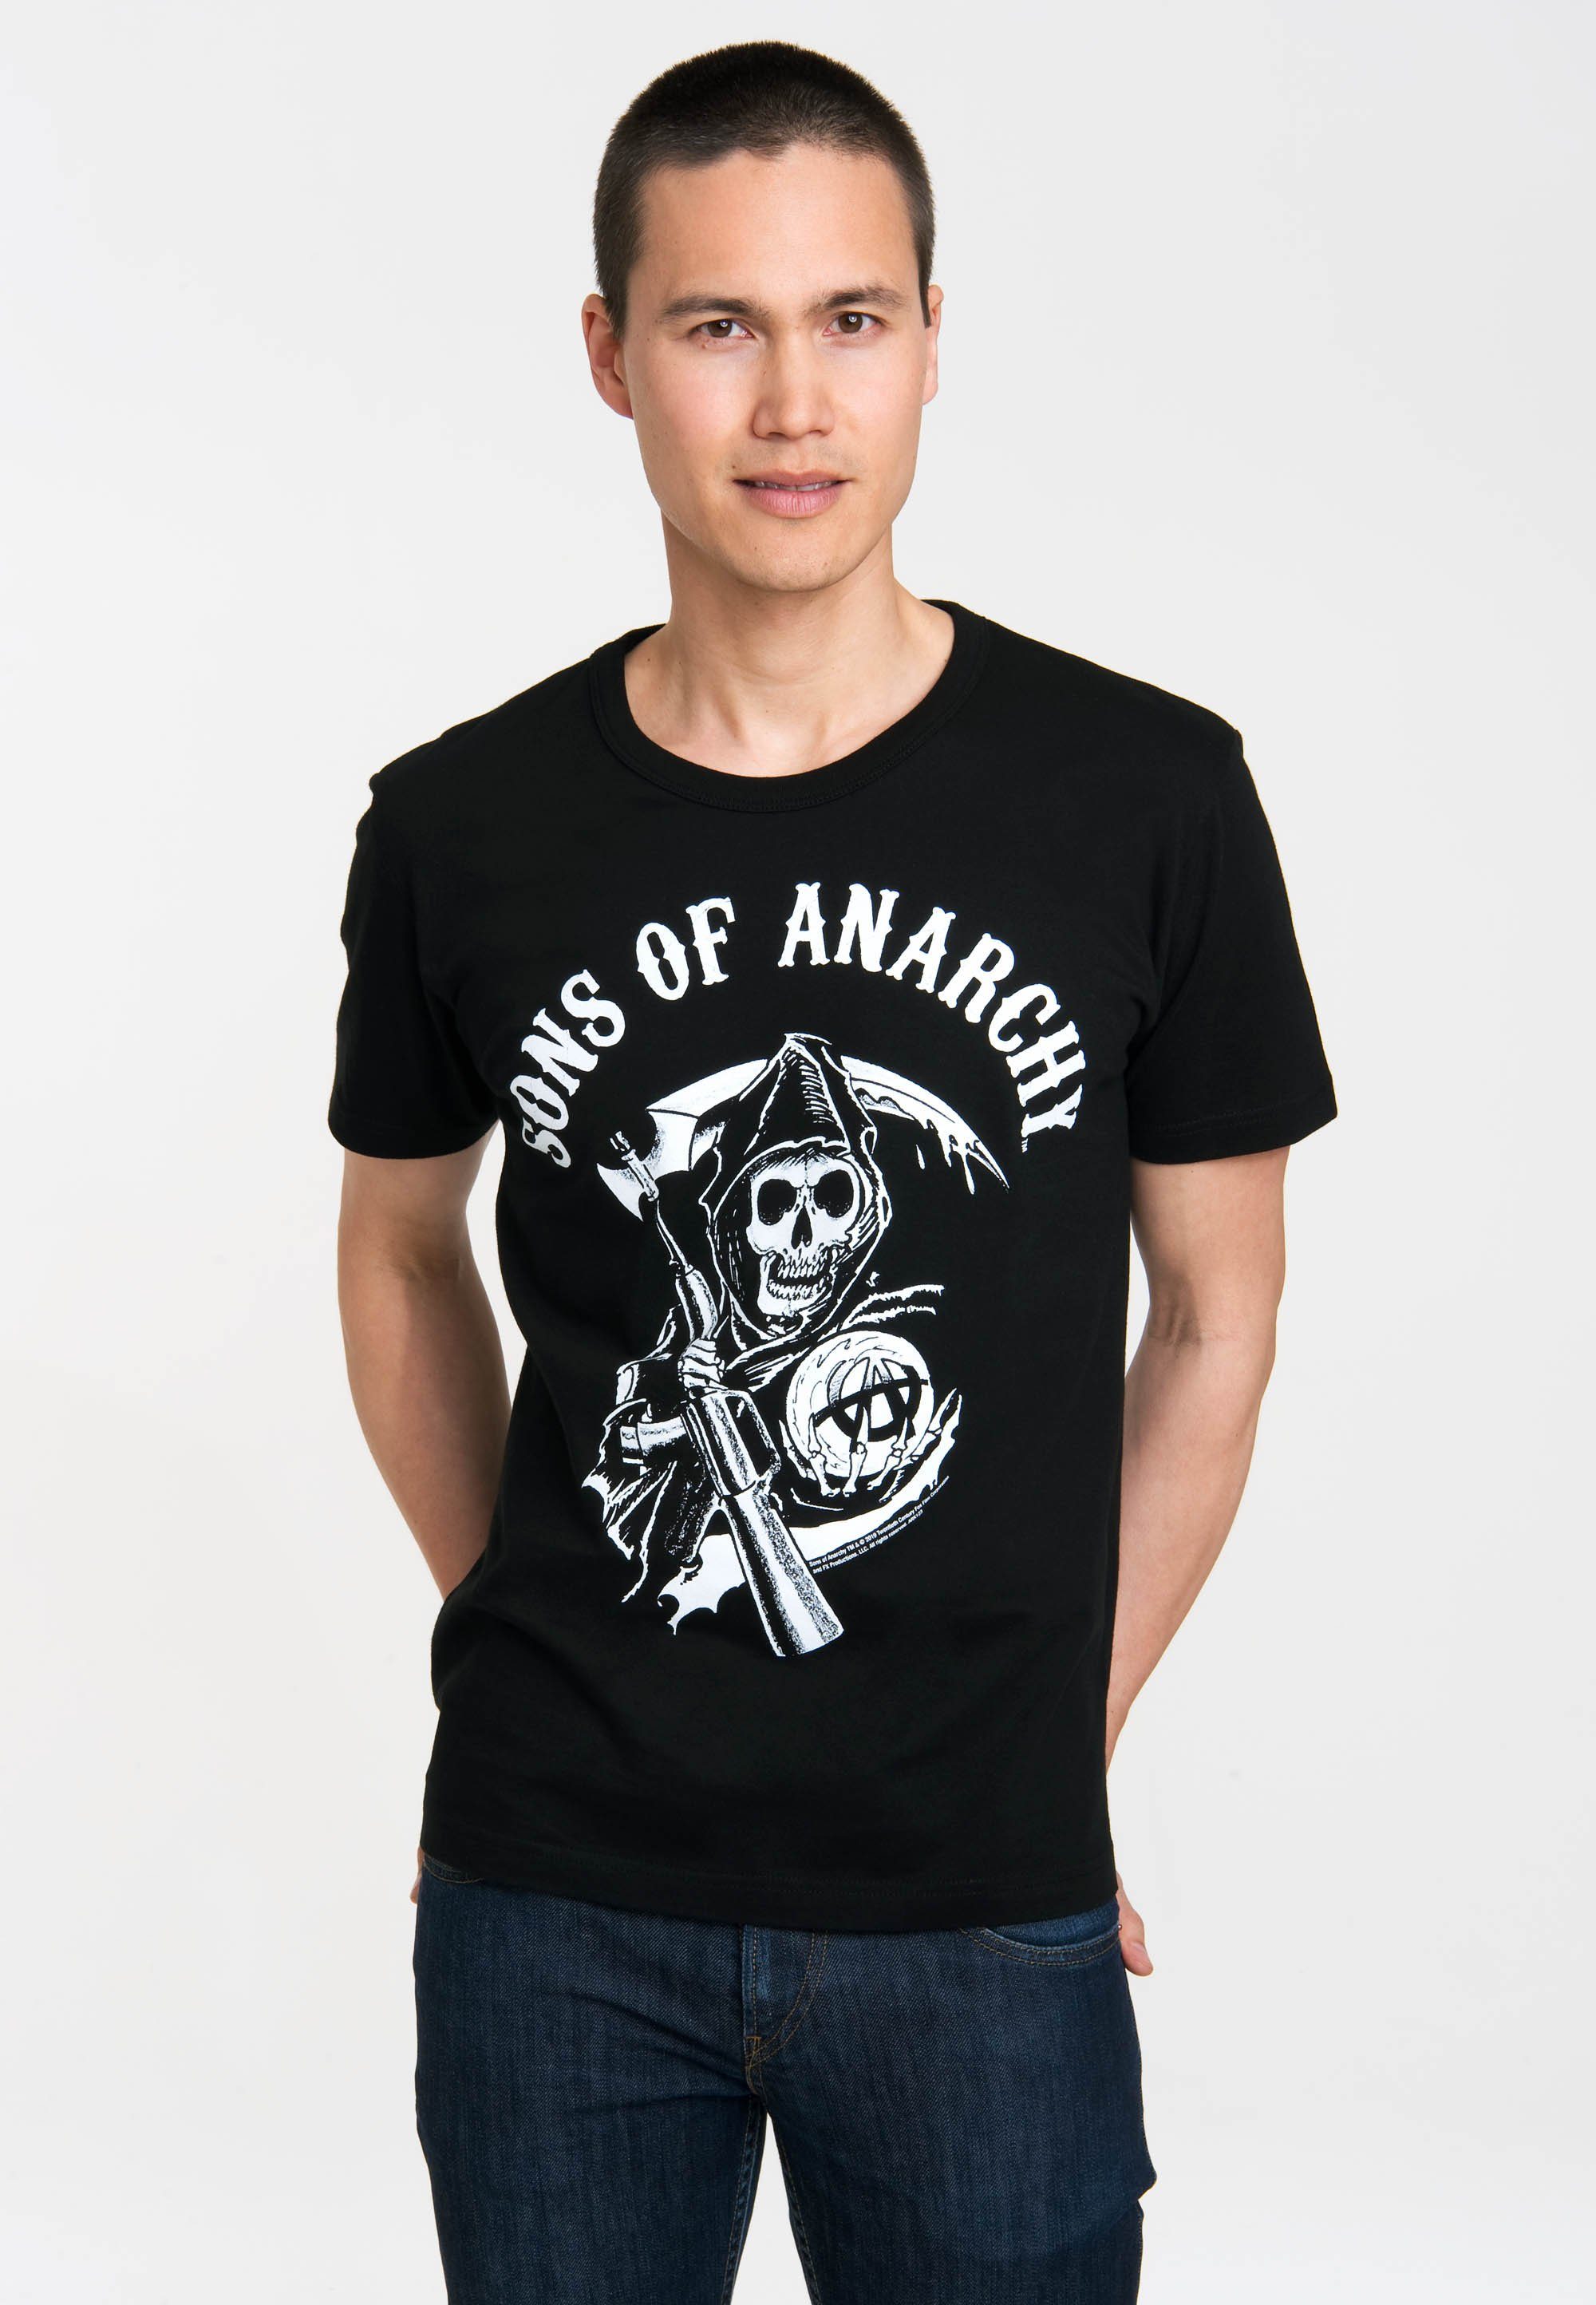 T-Shirt of of Sons Logo Anarchy-Print LOGOSHIRT Anarchy Sons mit